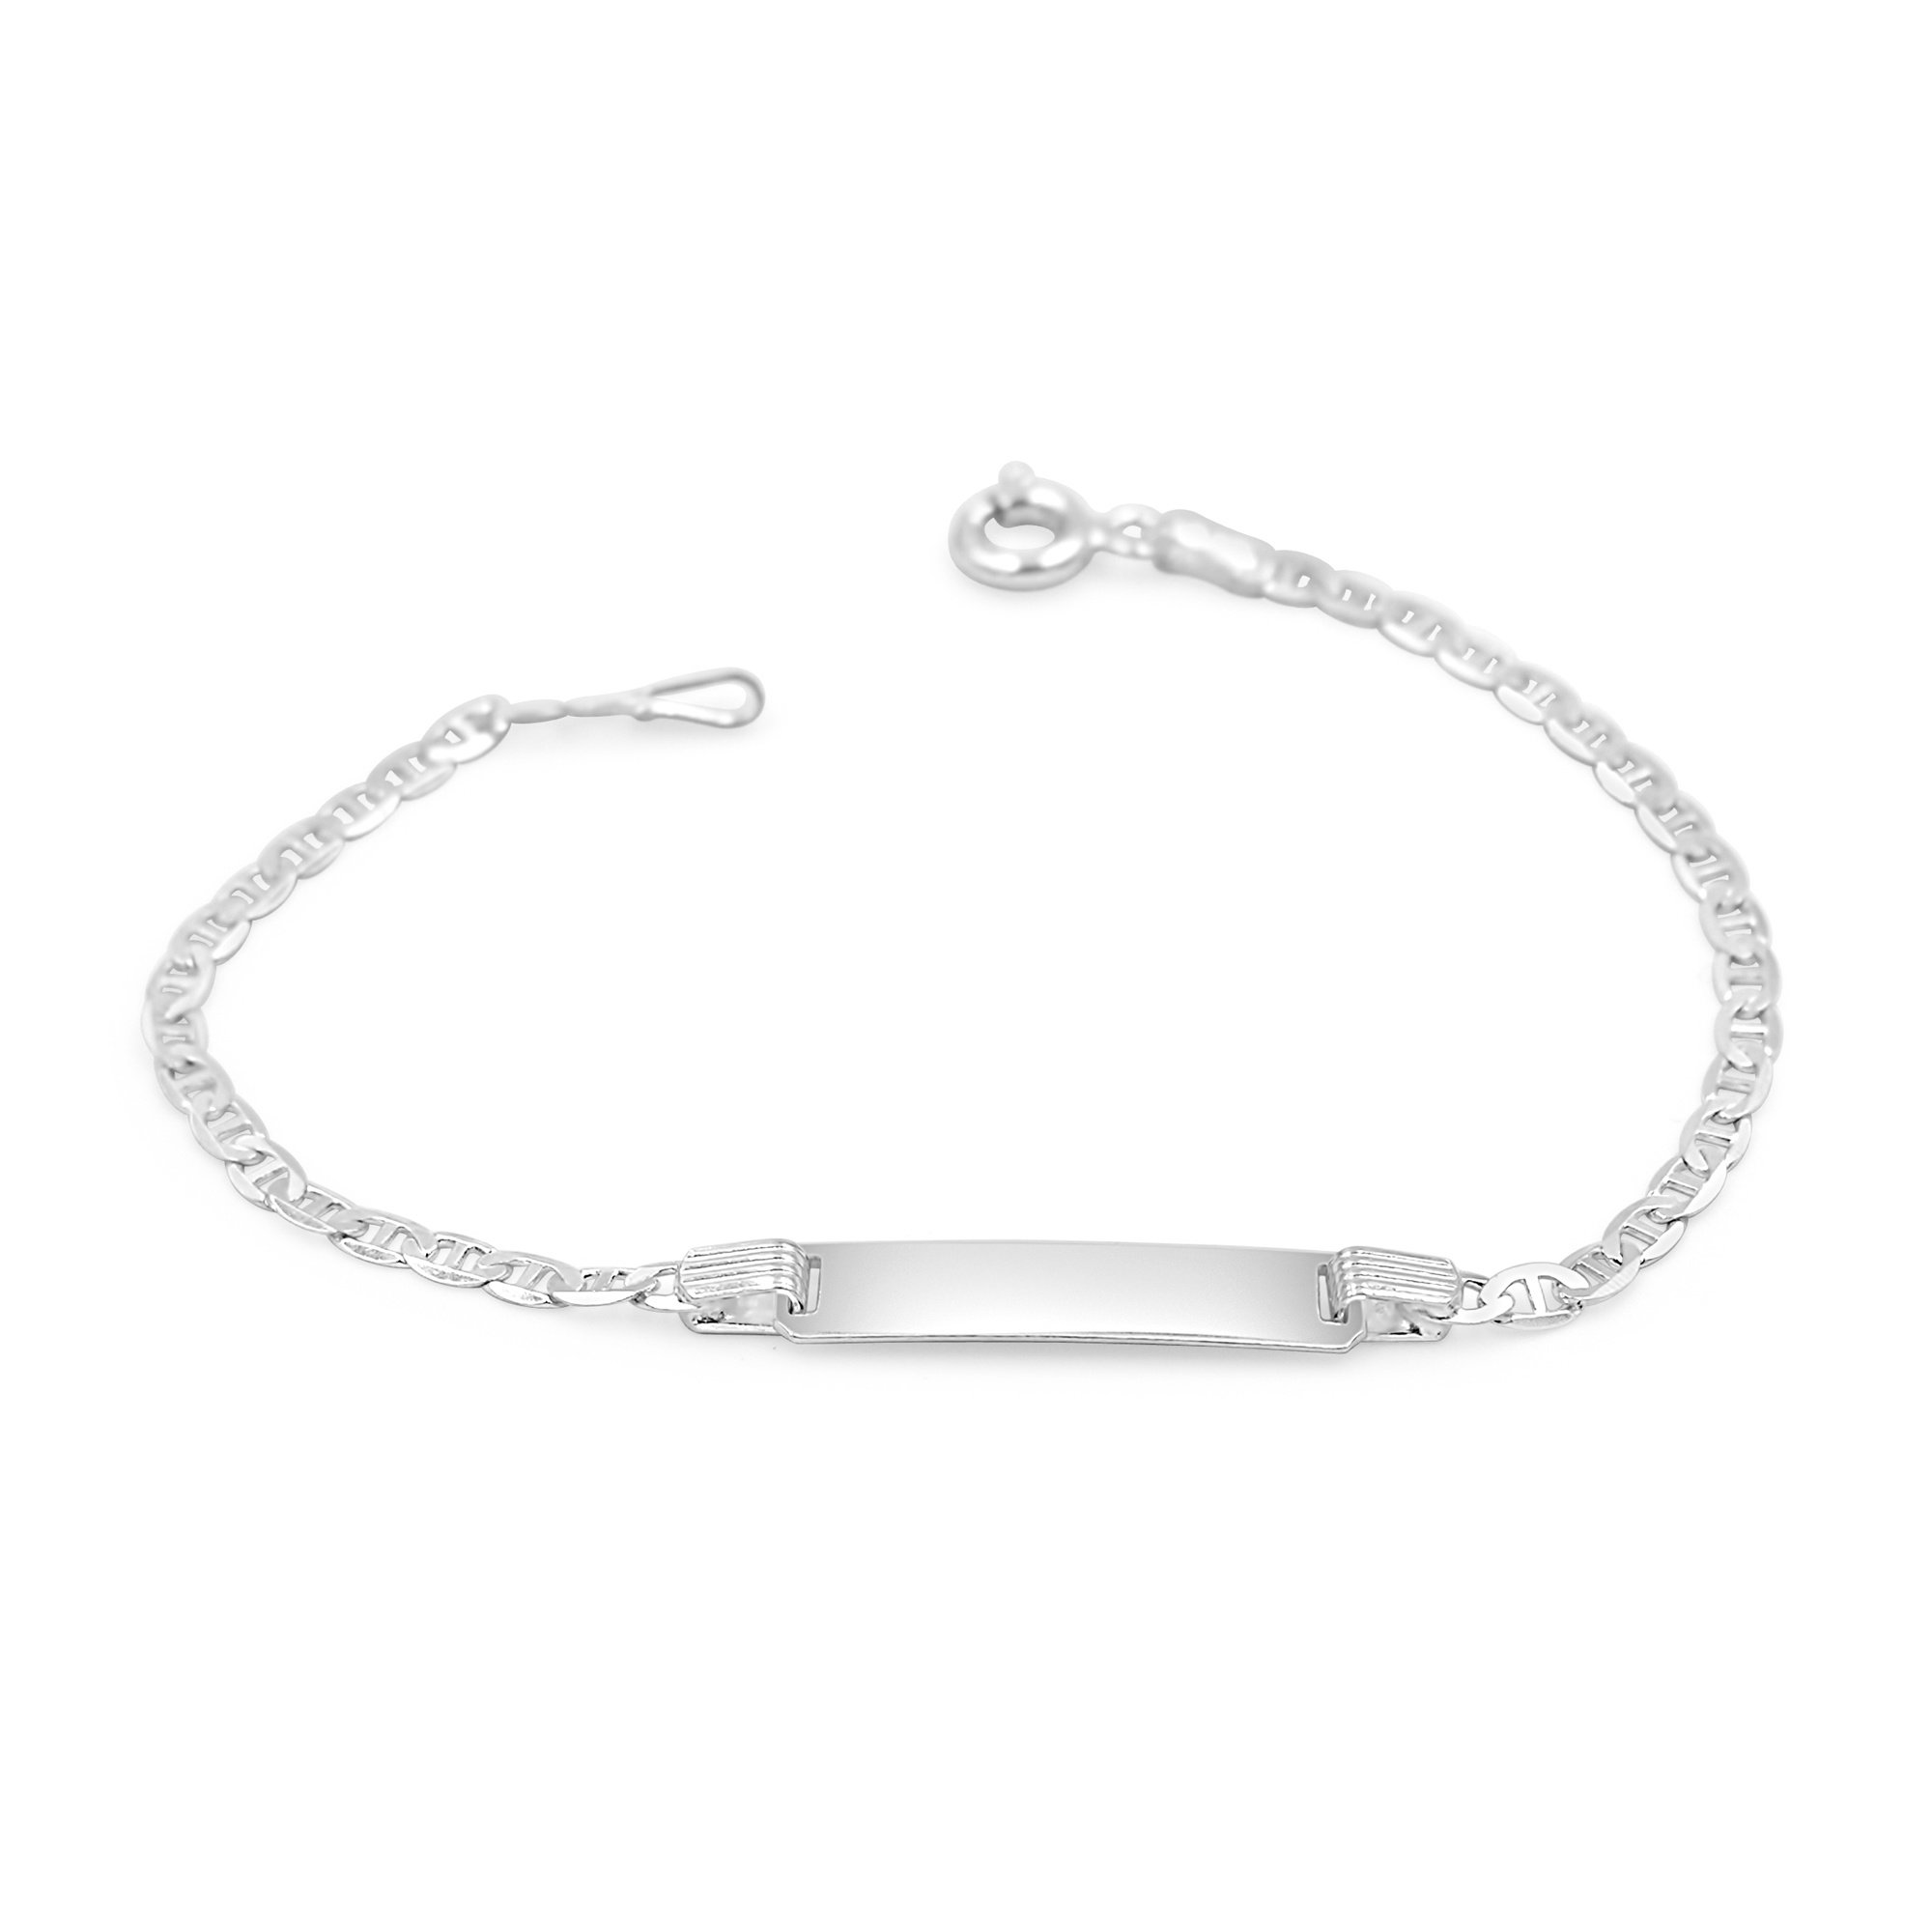 Silver baby bracelet